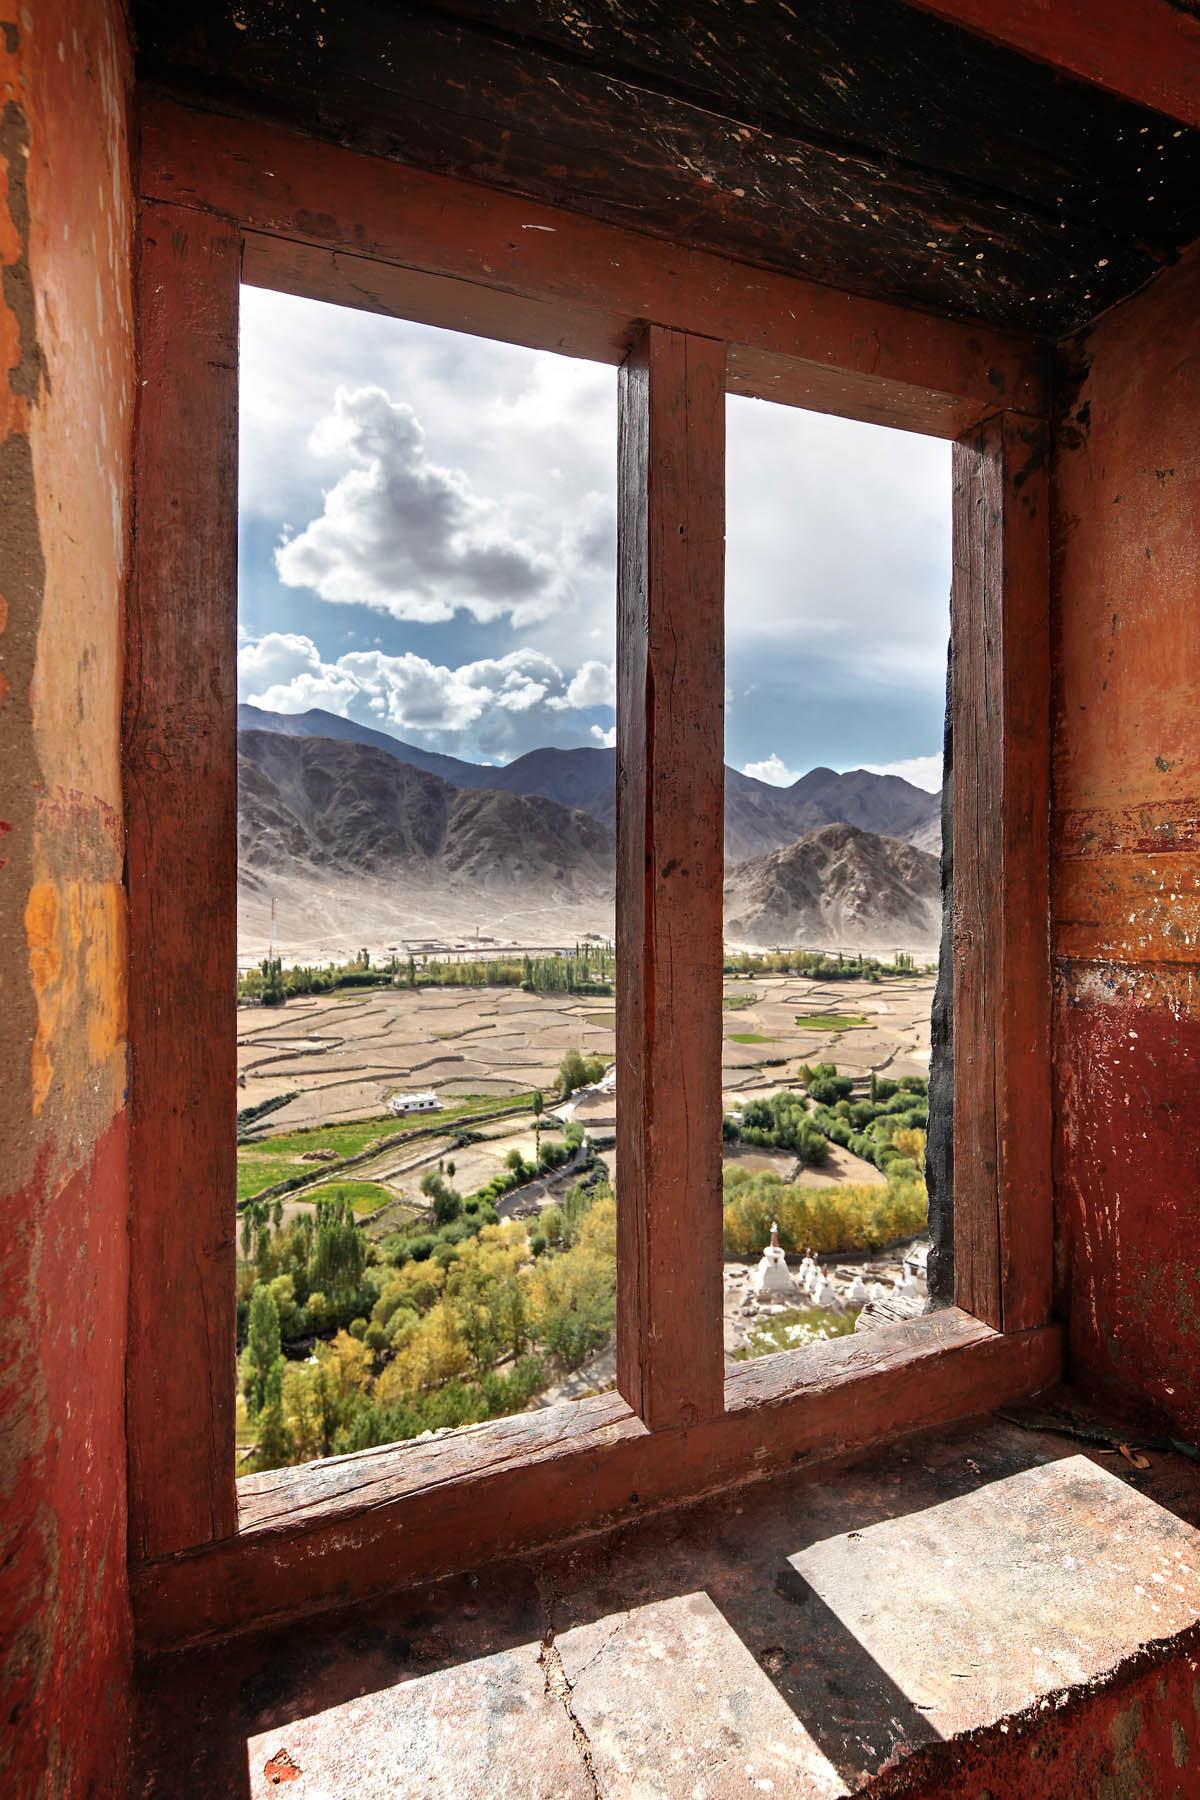 View over the barley fields, Chemdrey Monastery, Ladakh, India